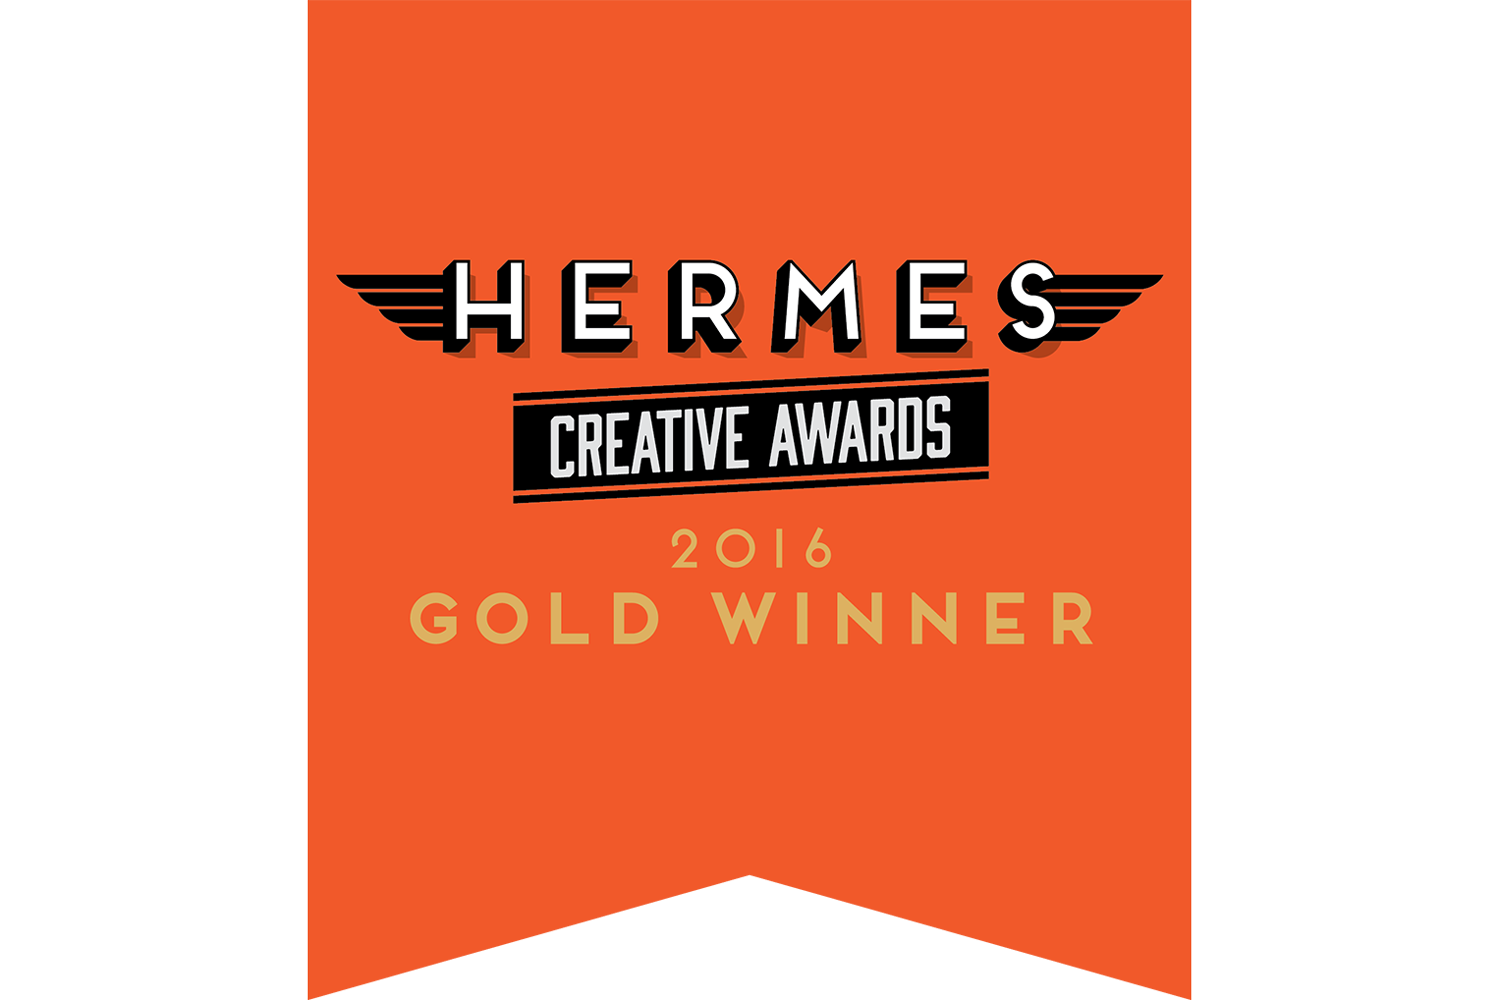 Hermes Creative Awards 2016 Gold